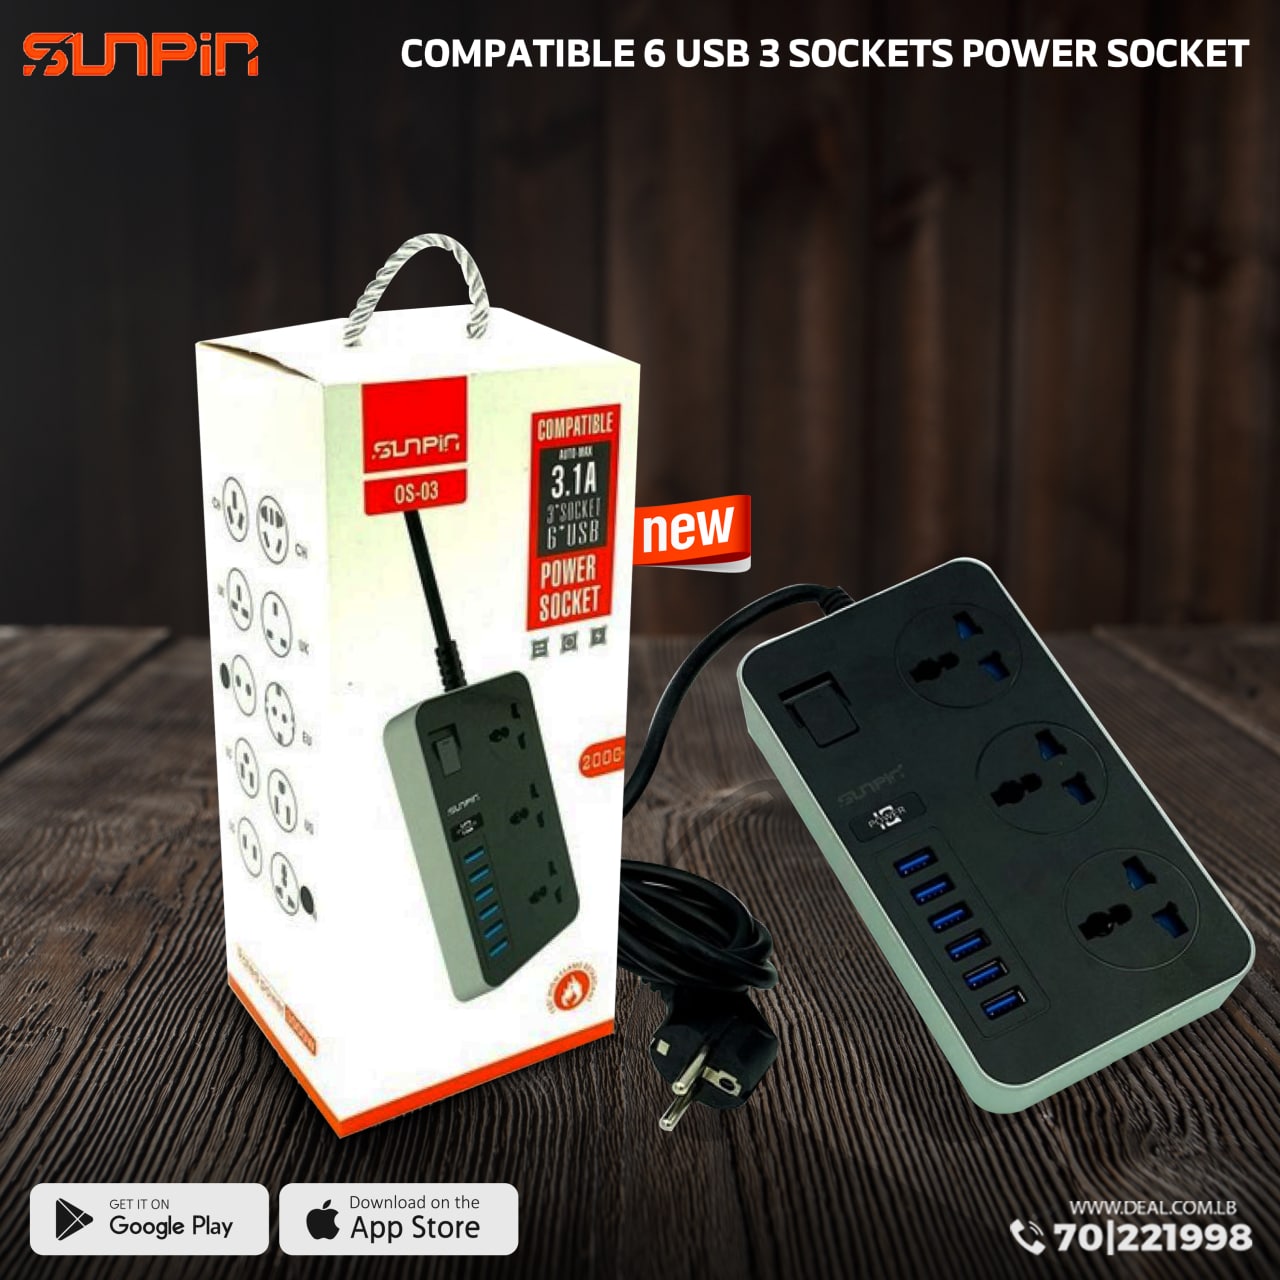 SUNPIN 0S-03 COMPATIBLE 3*SOCKETS 6*USB POWER SOCKET